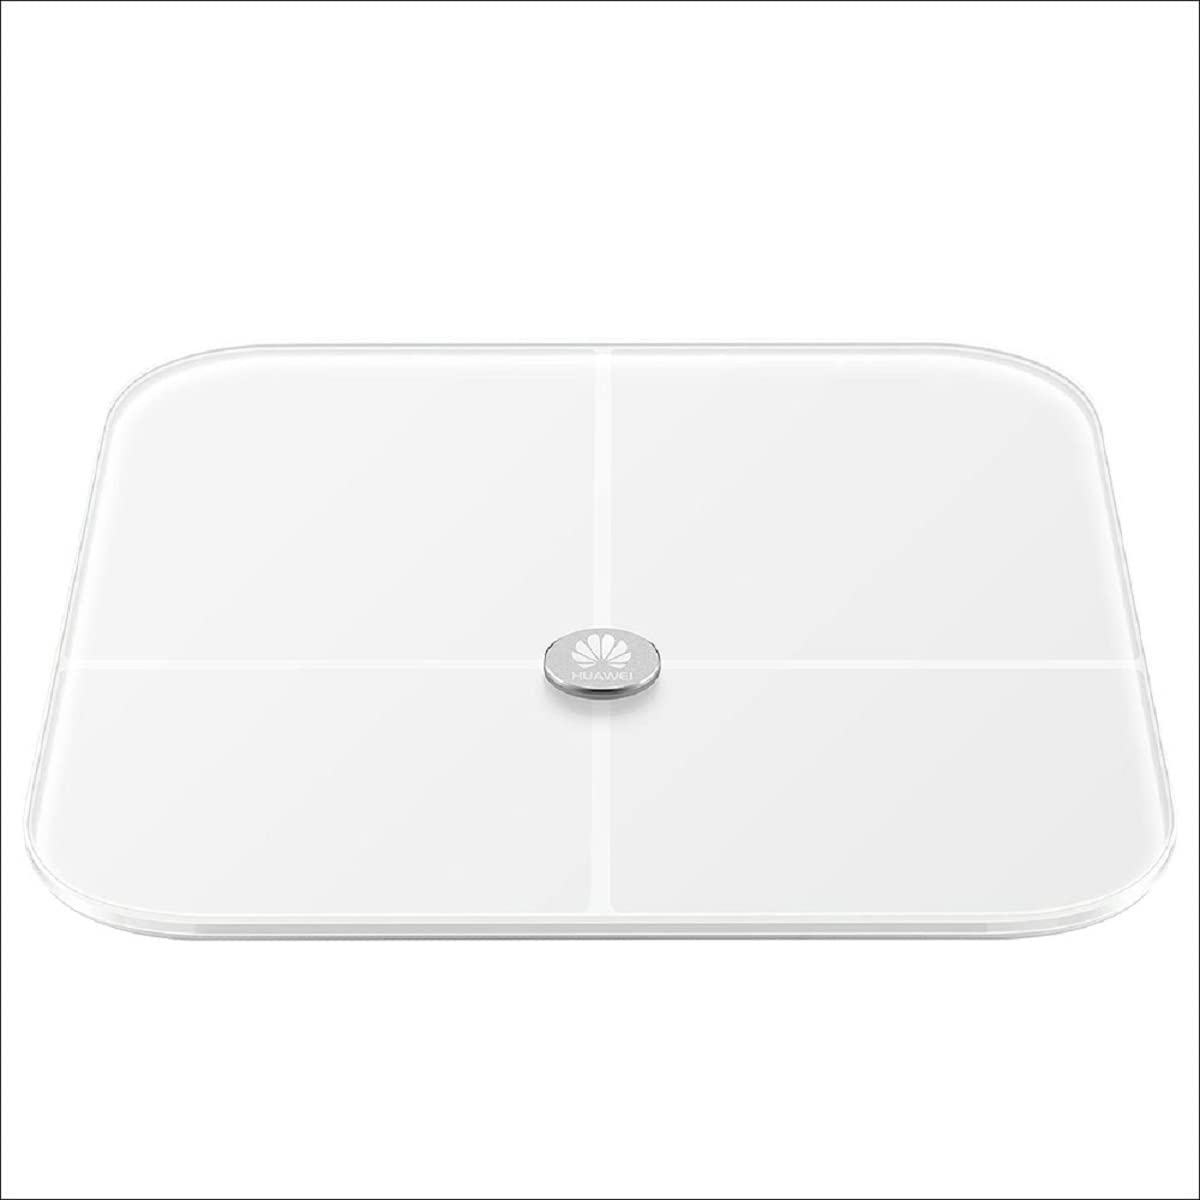 Huawei AH100 Digital Body Fat Scale, White